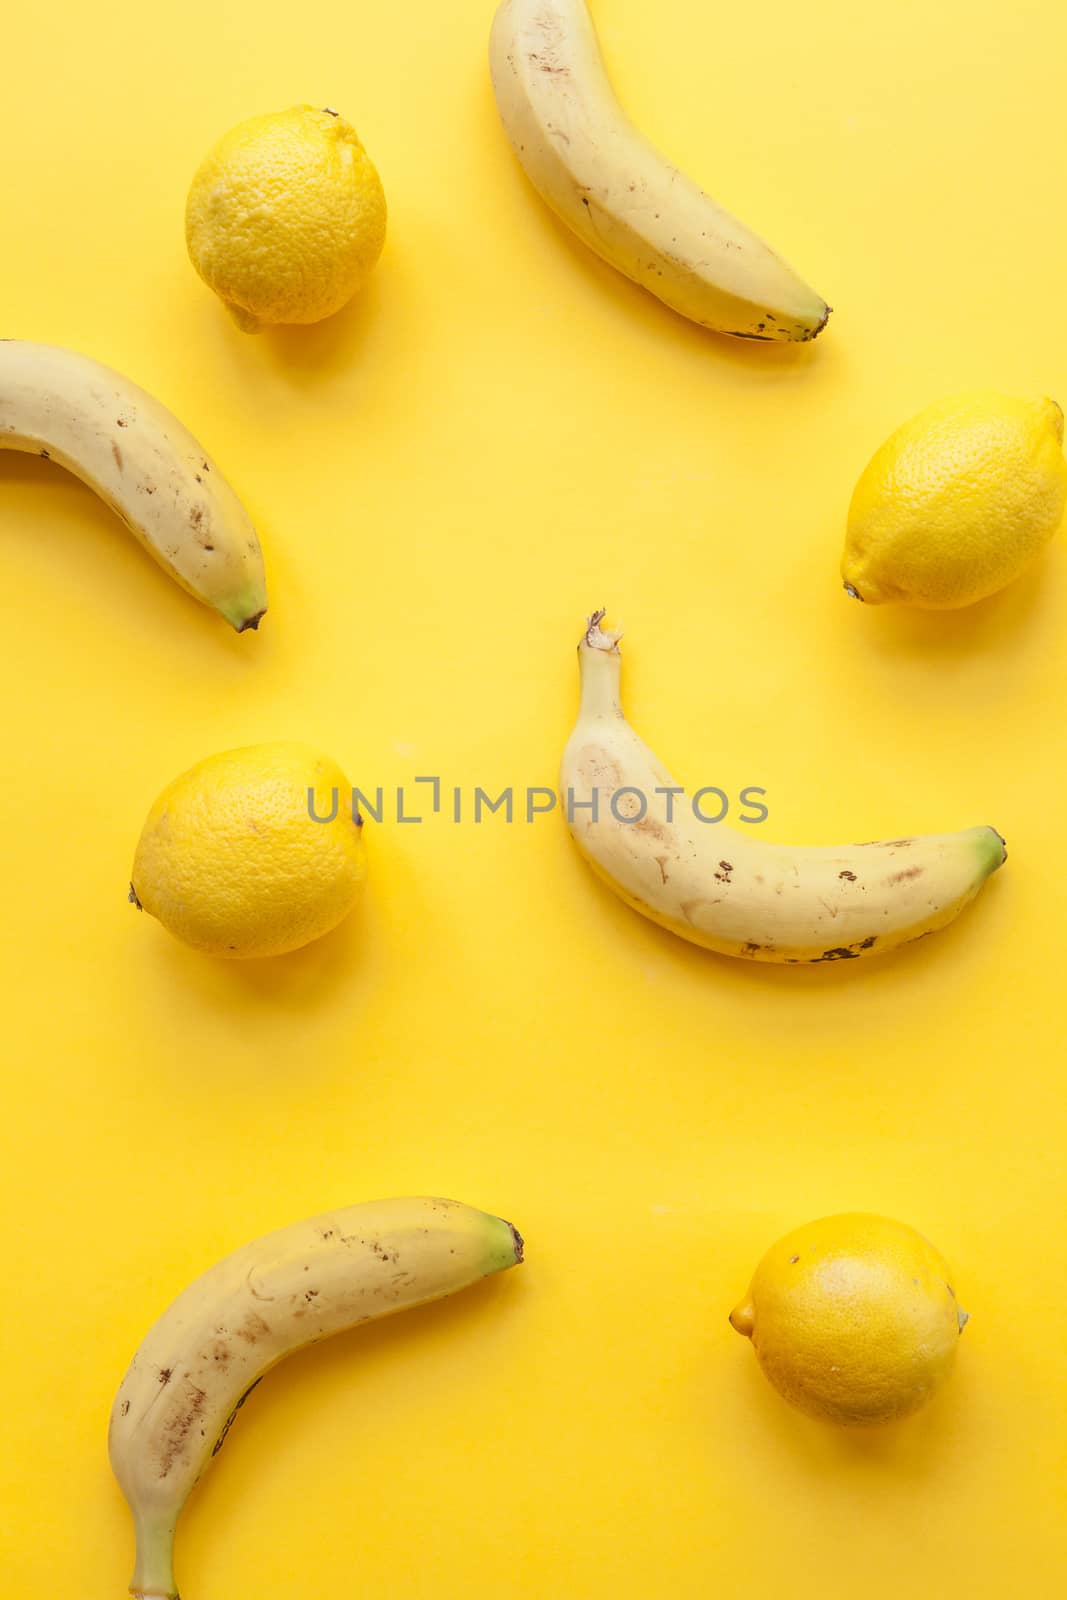 Bananas and lemons on yellow background by andongob